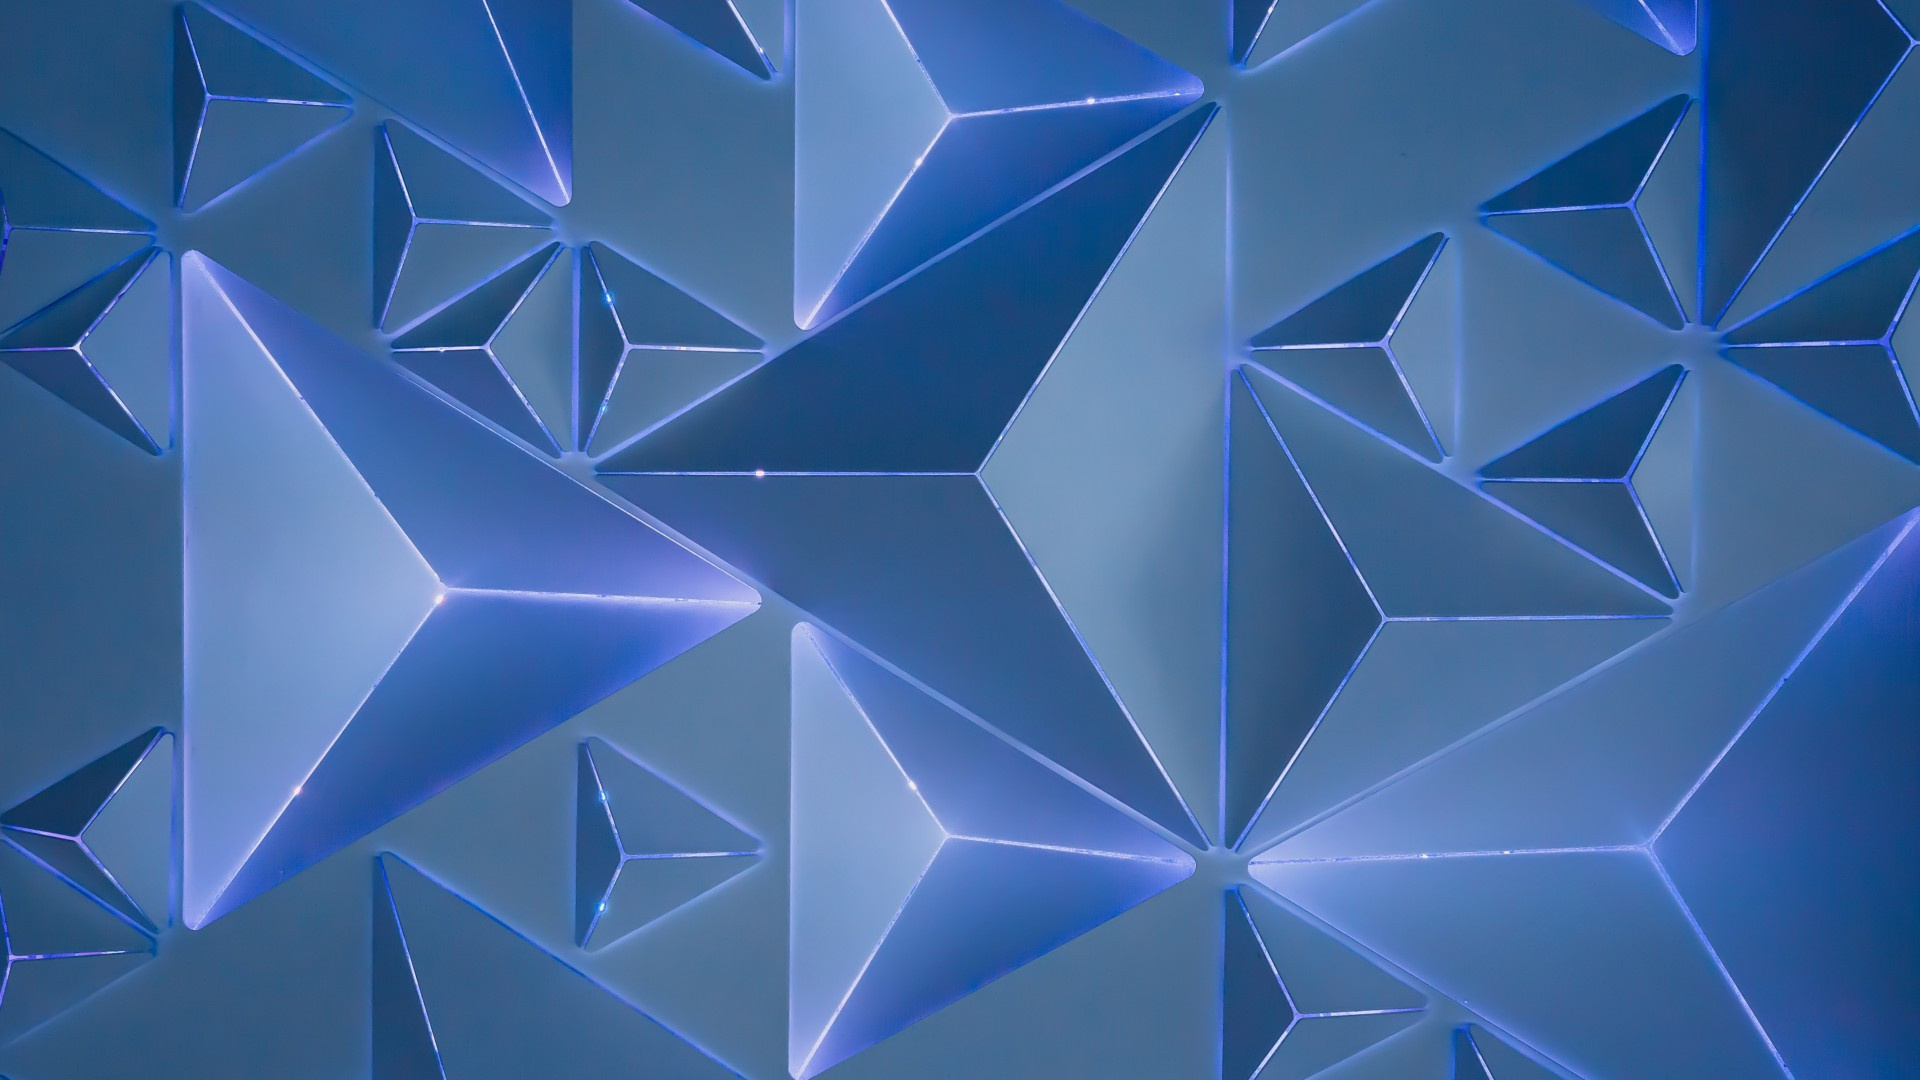 Triangle wallpaper, Neon light design, Geometric shapes inspiration, Widescreen background, 1920x1080 Full HD Desktop